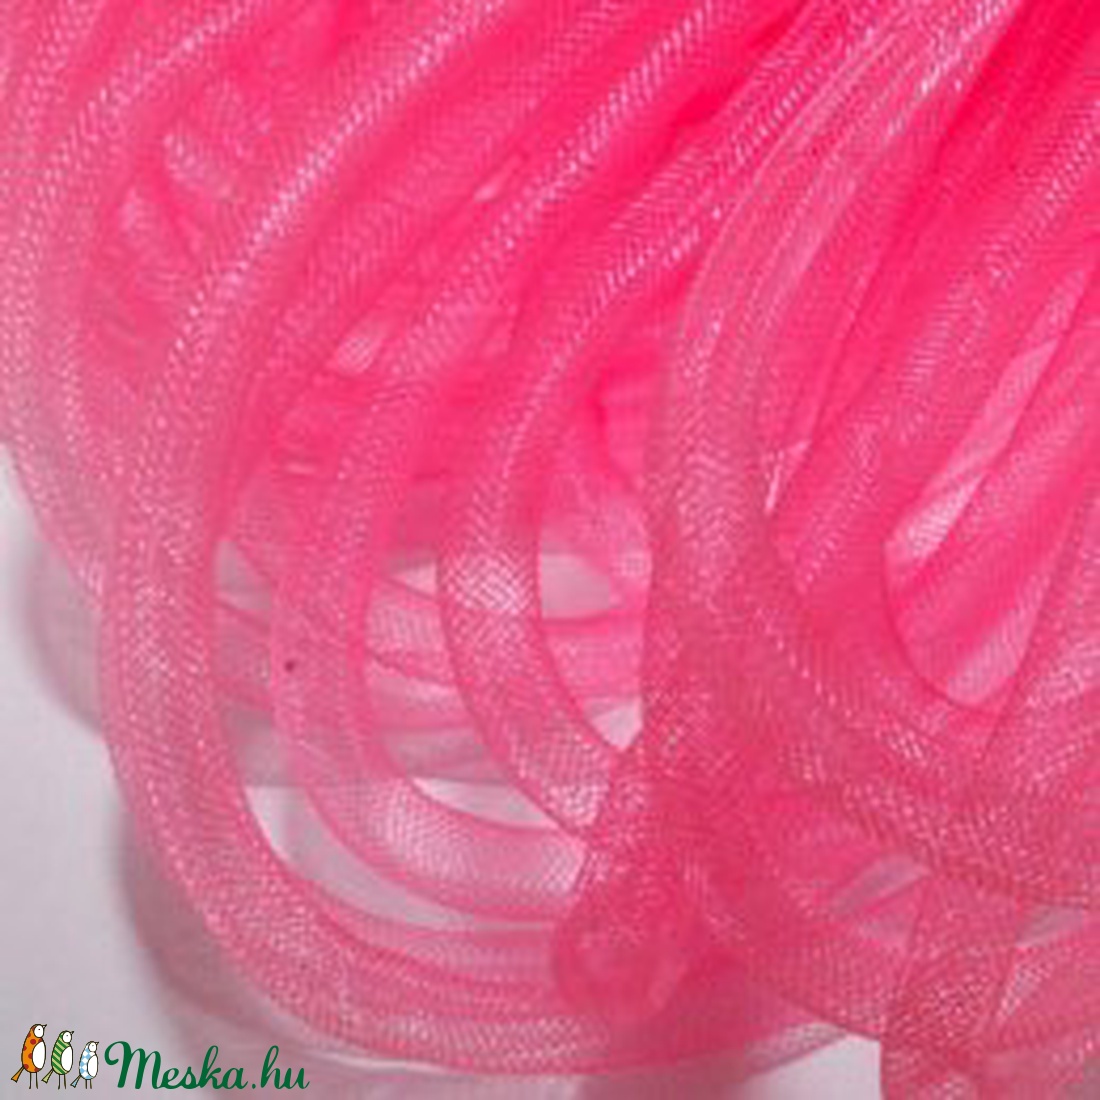 Rózsaszín rugalmas nylon (wire mesh) cső 8mm /1m - gyurma - kiégethető gyurma - Meska.hu